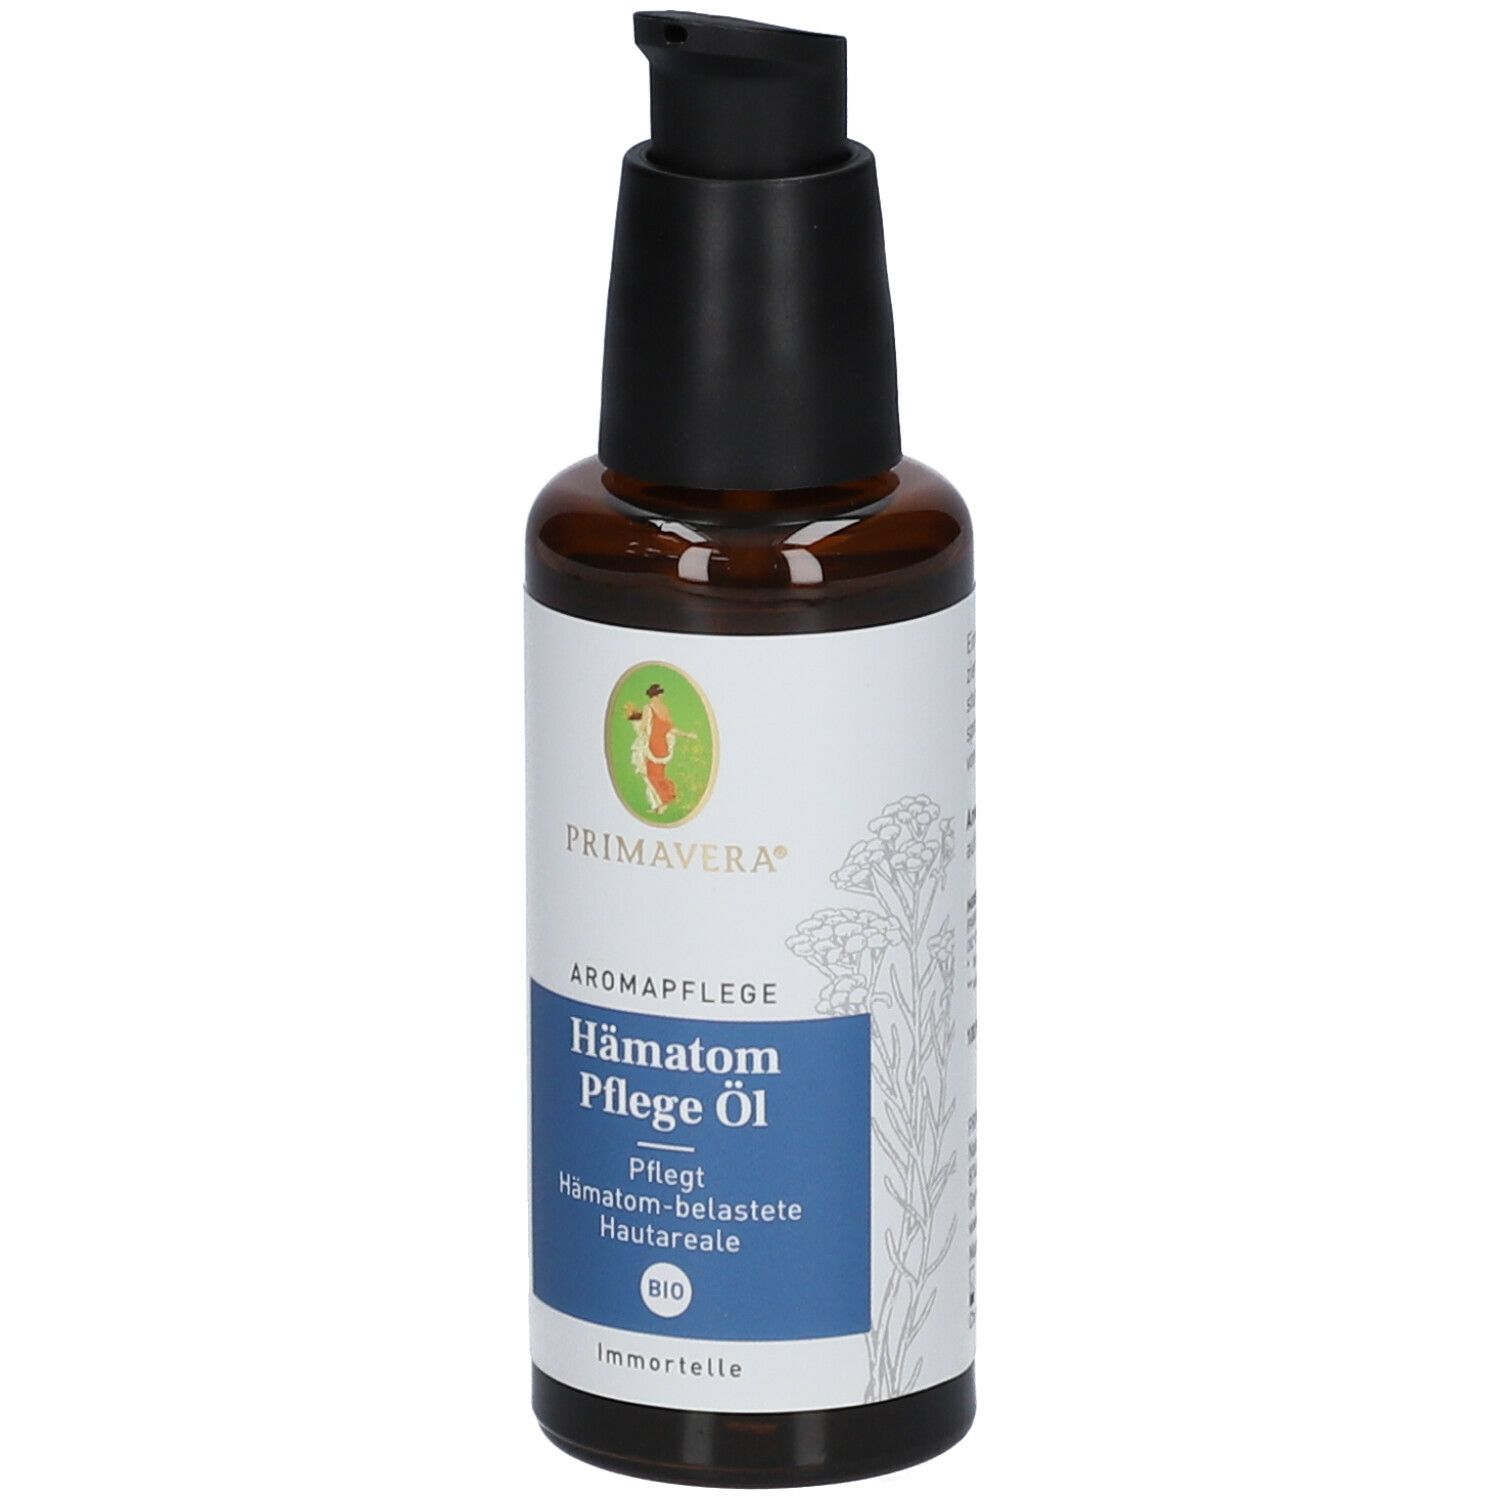 PRIMAVERA® Aromapflege Hämatom Pflege Öl BIO